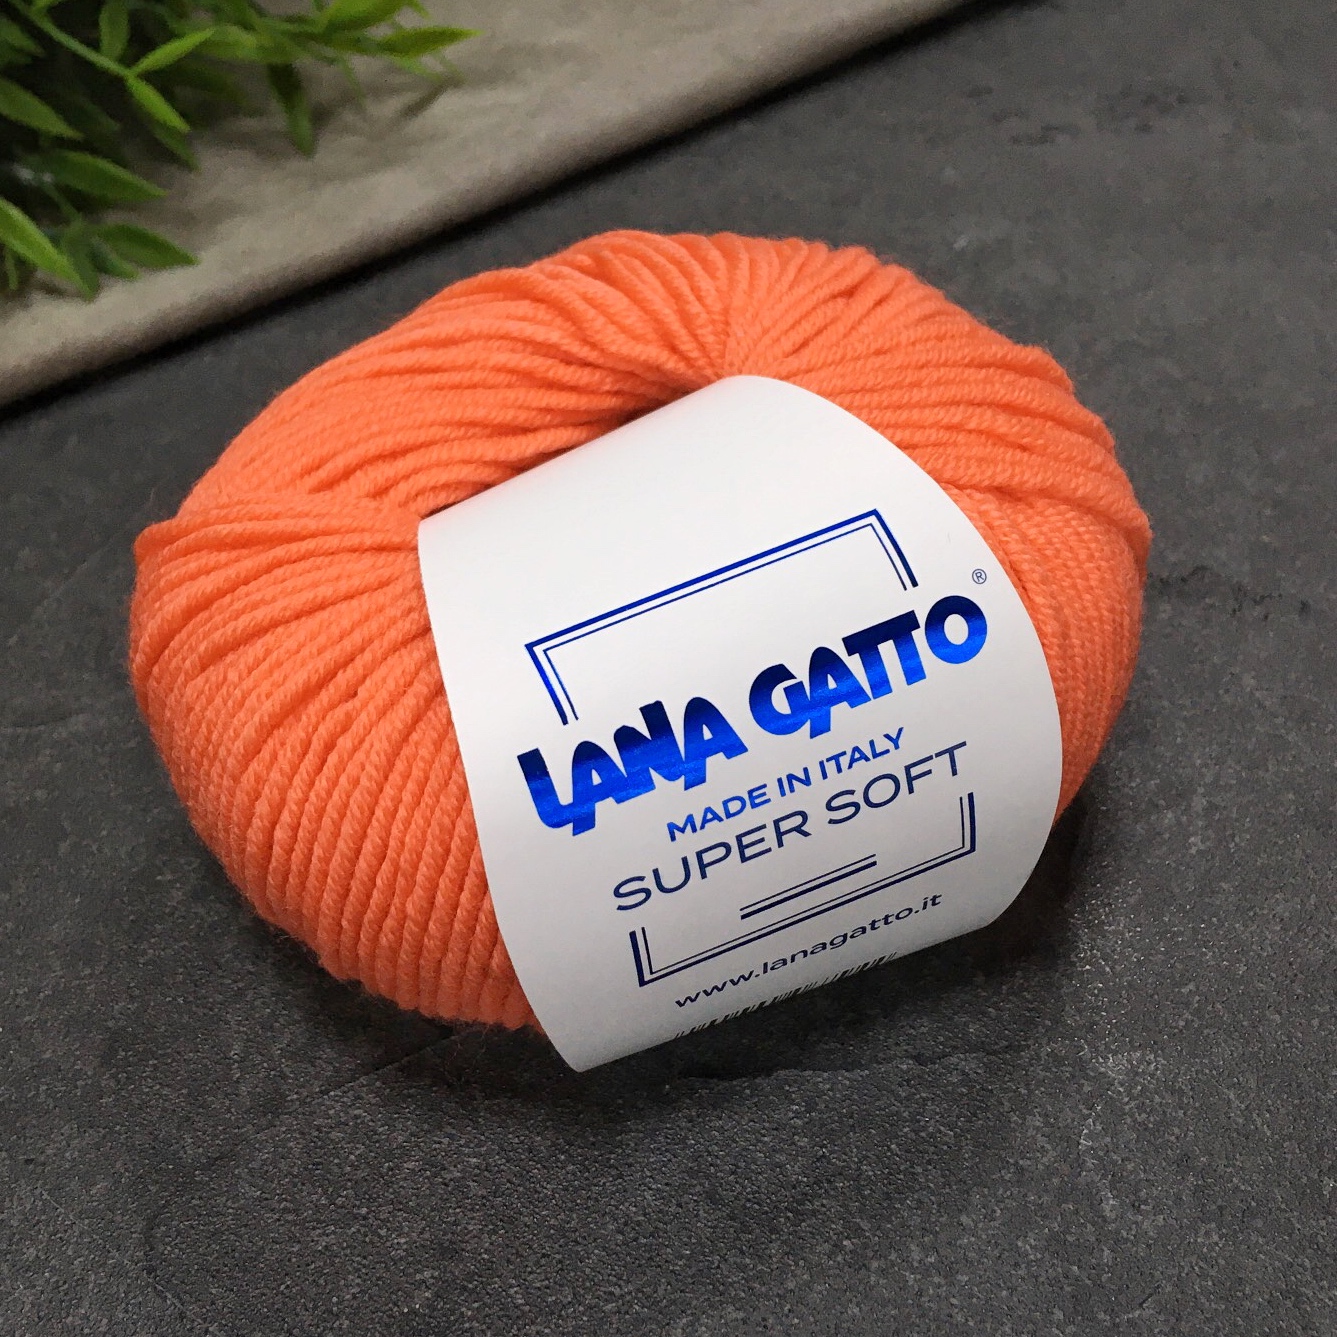 Купить пряжу lana gatto. Пряжа Lana gatto super Soft 8960.